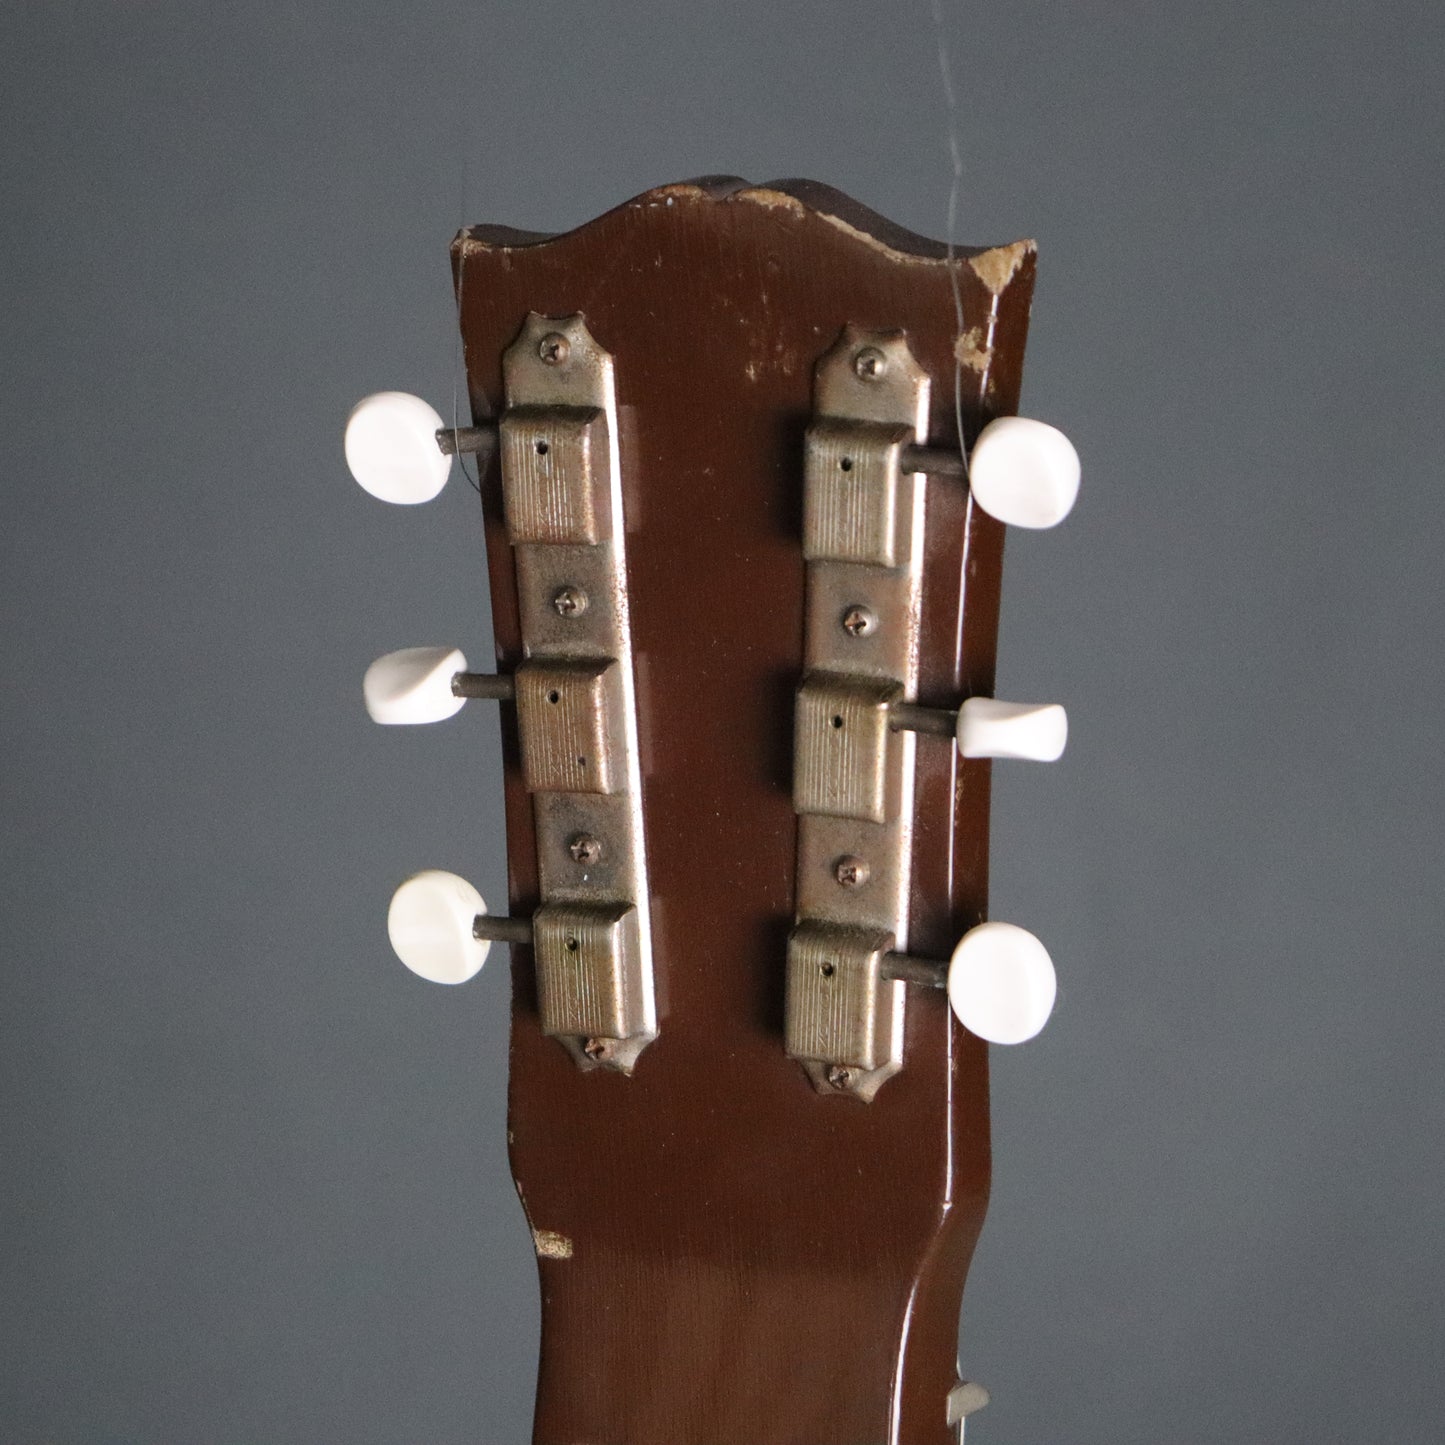 1950s Gibson Royaltone Electric Hawaiian Lap Steel Guitar